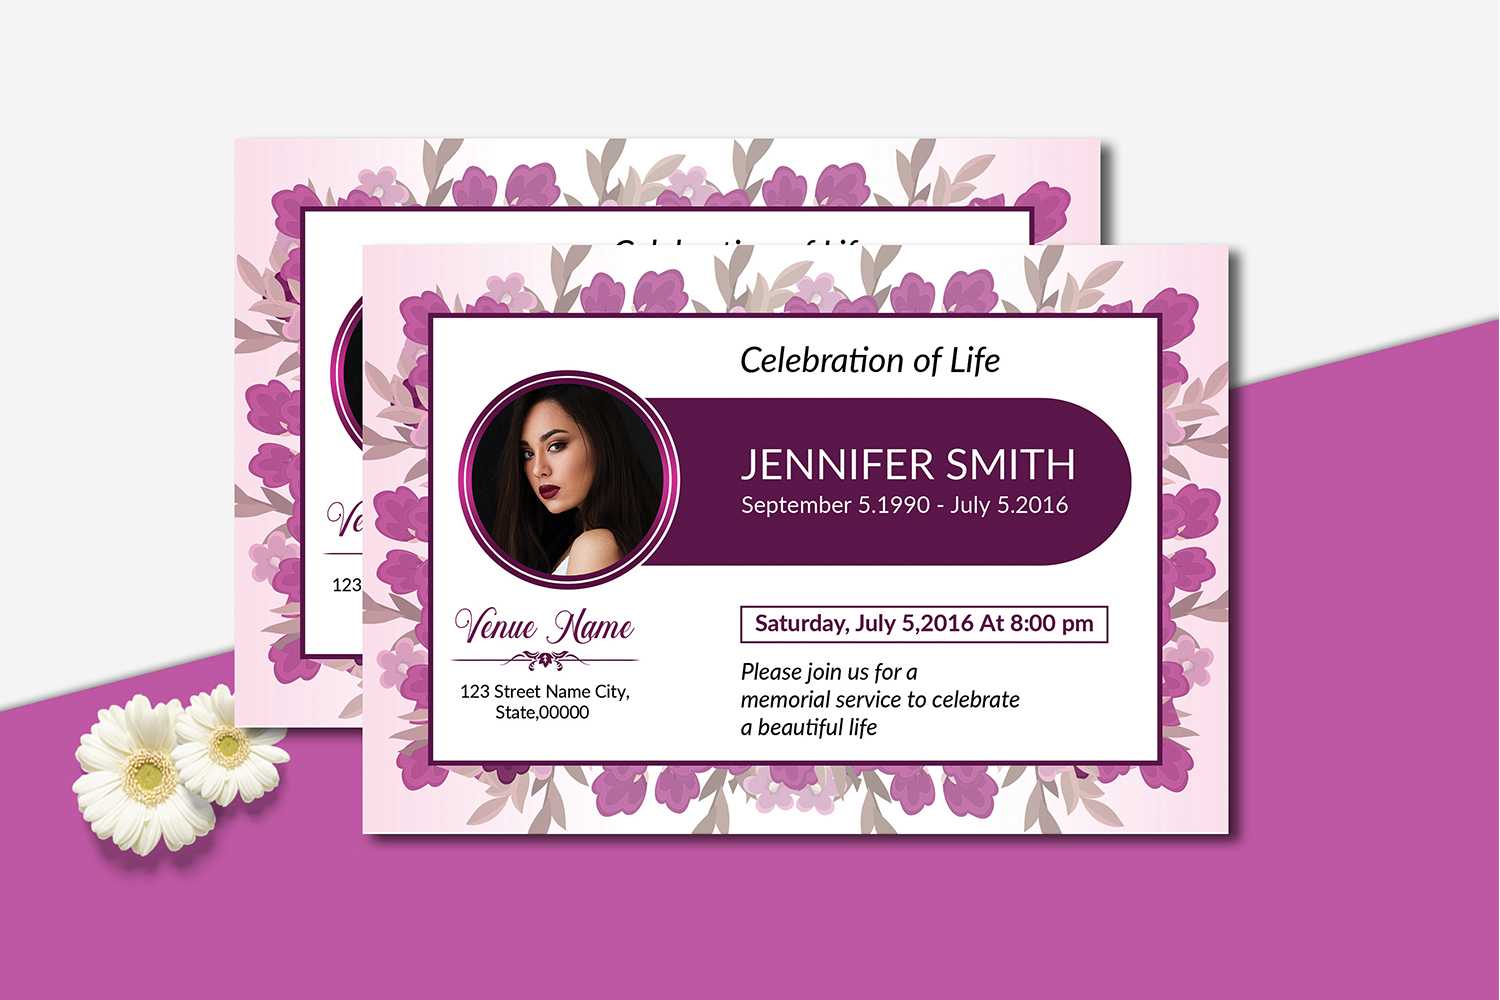 Funeral Announcement / Invitation Card Template Regarding Funeral Invitation Card Template